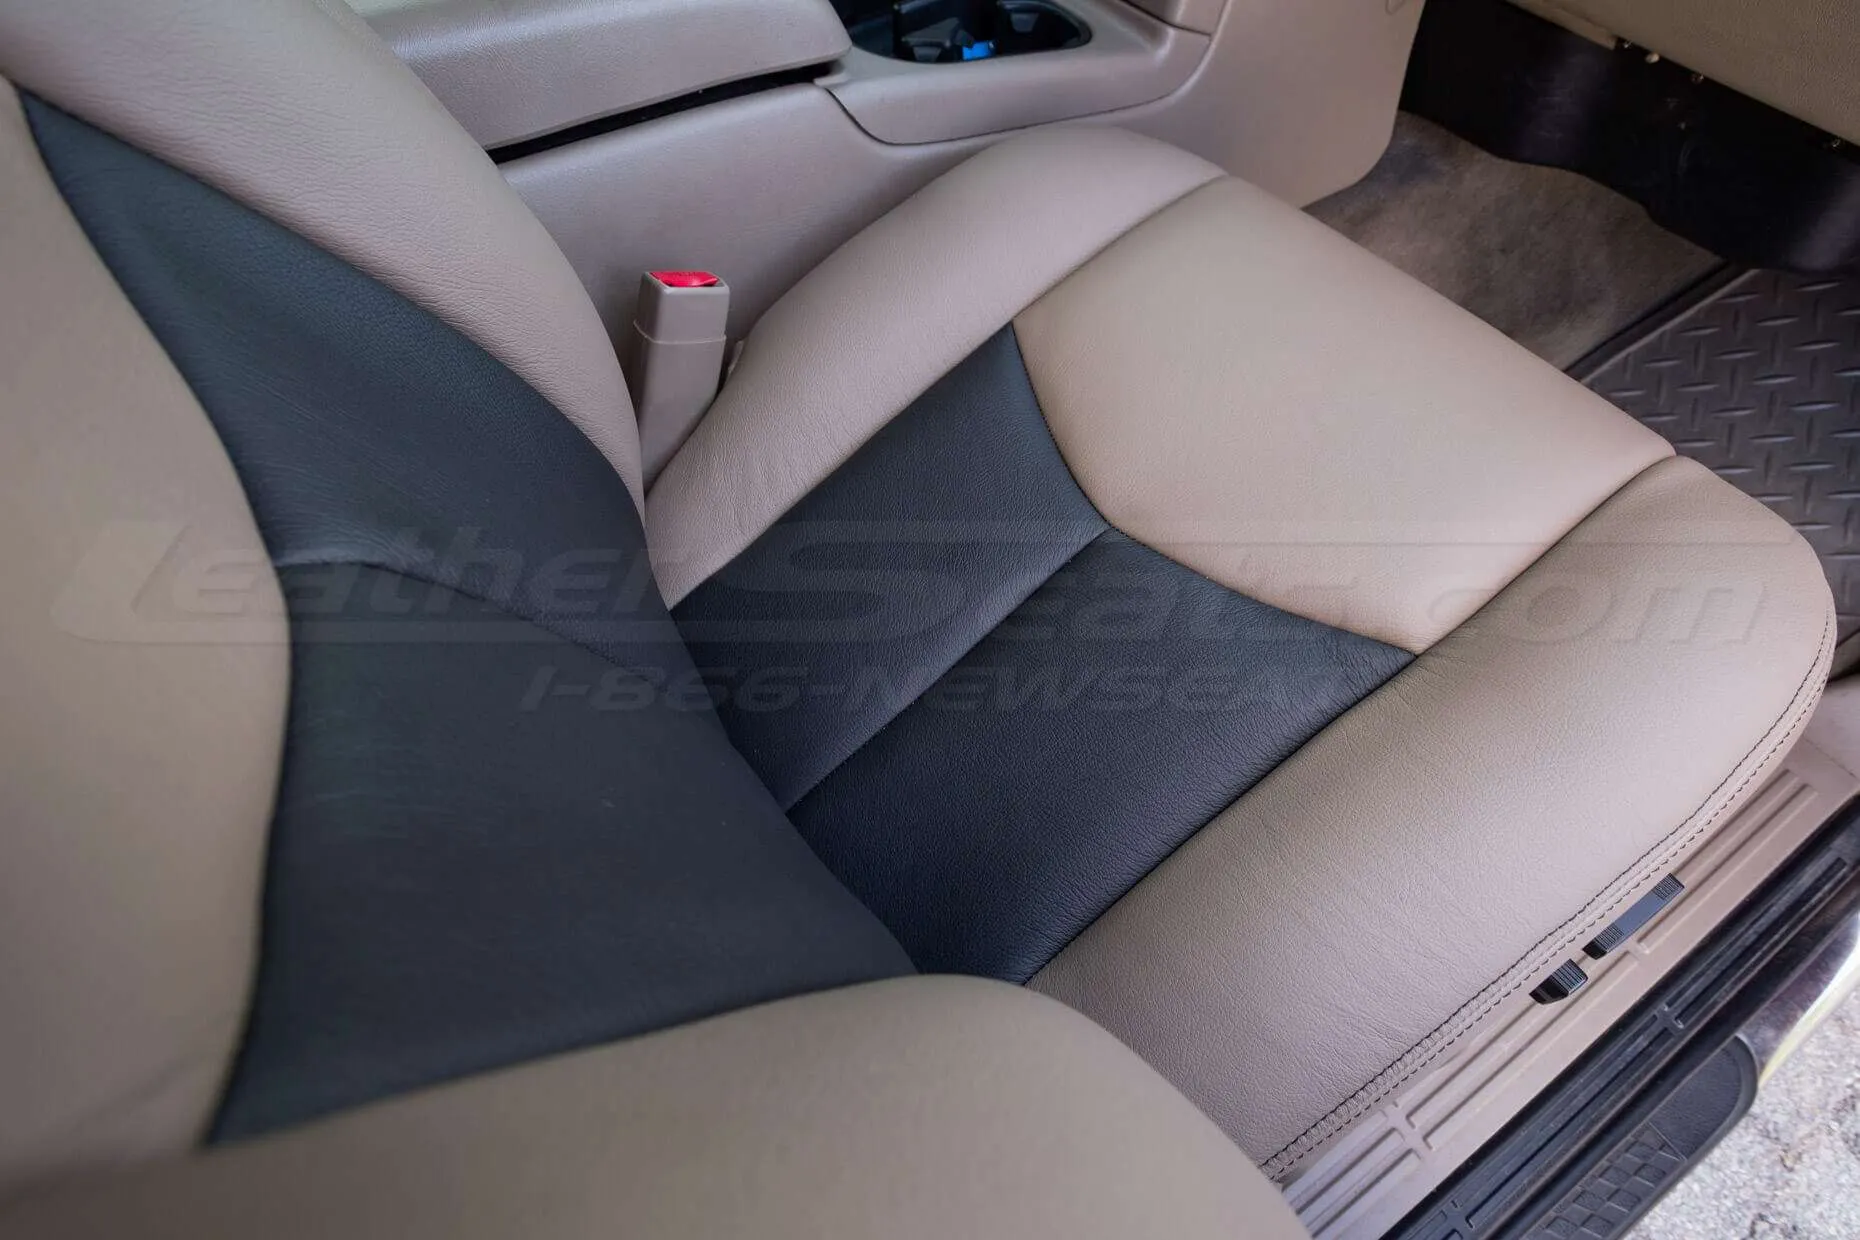 03-06 Chevrolet Avalanche Installed Upholstery Kit - Desert & Black - Top down seat view